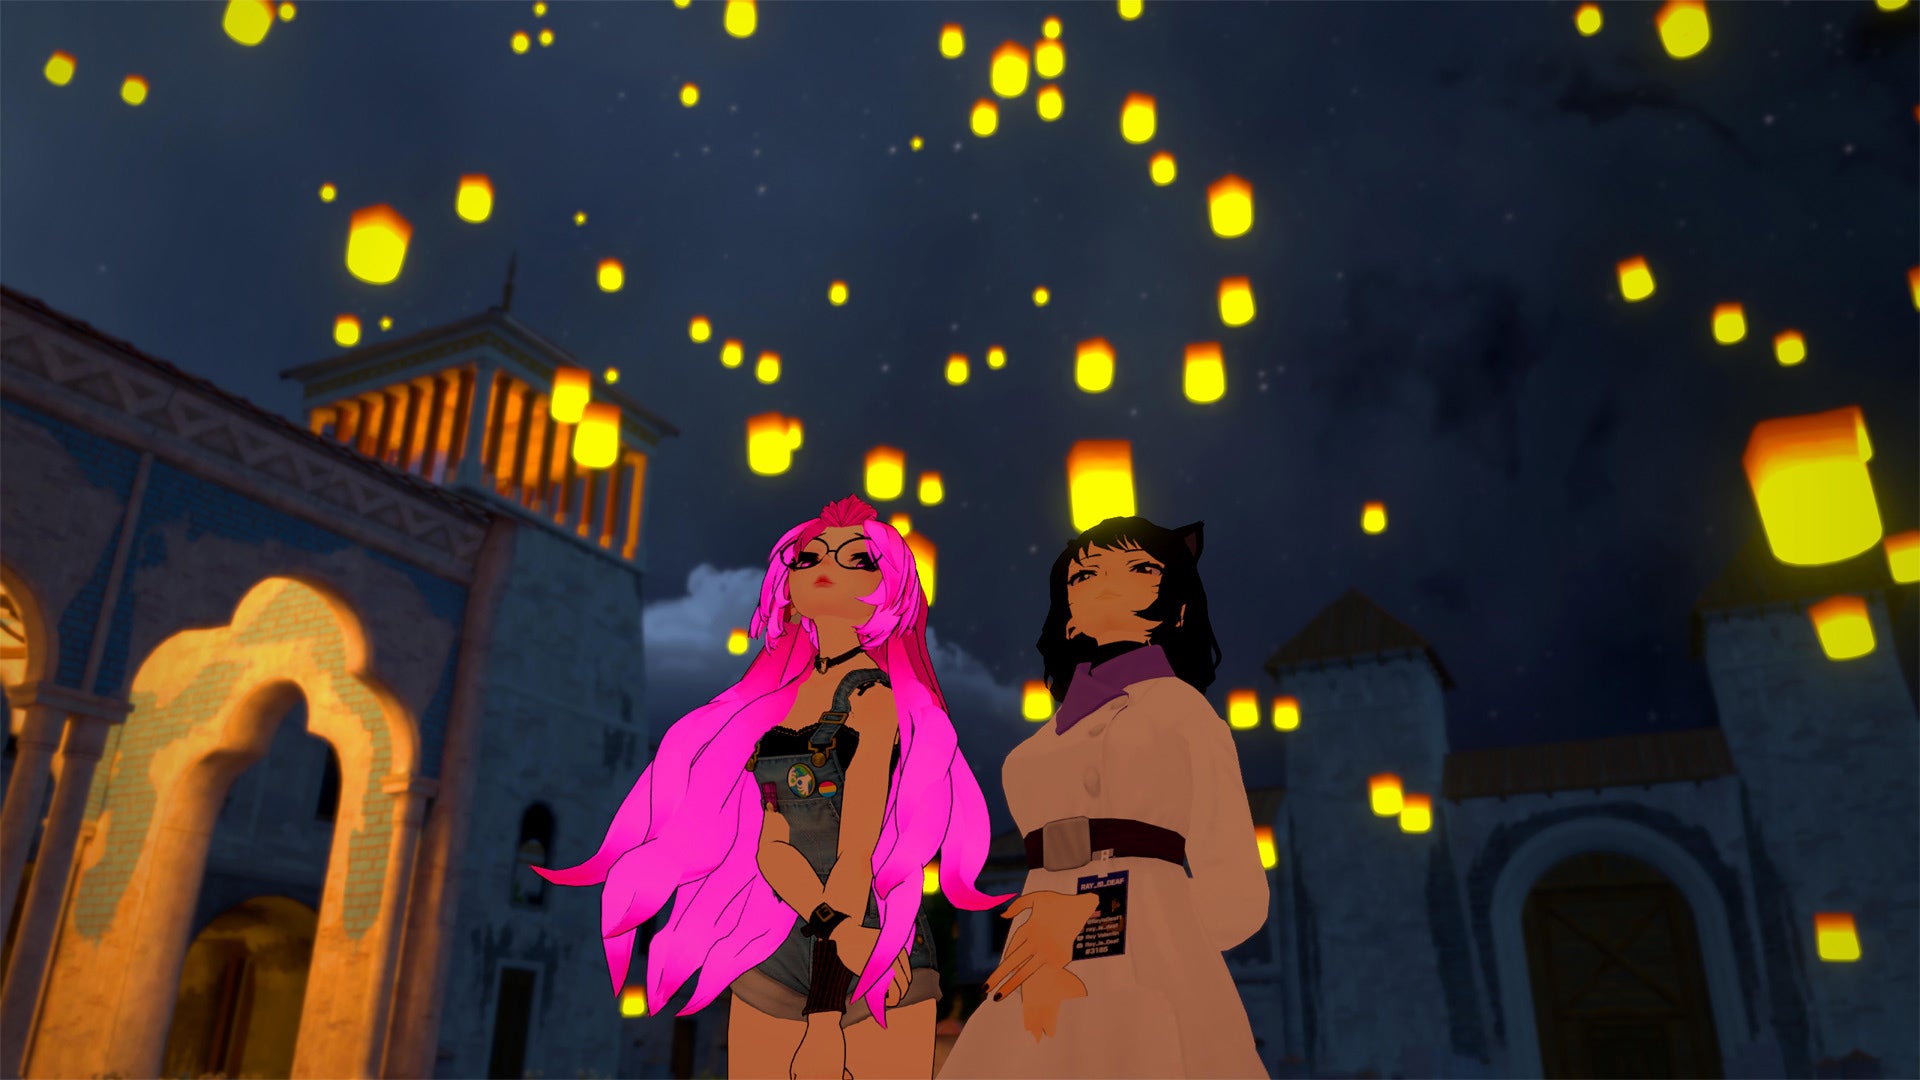 Jenny and Ray gaze up at the lanterns. (Image: HBO Max / Field of Vision)